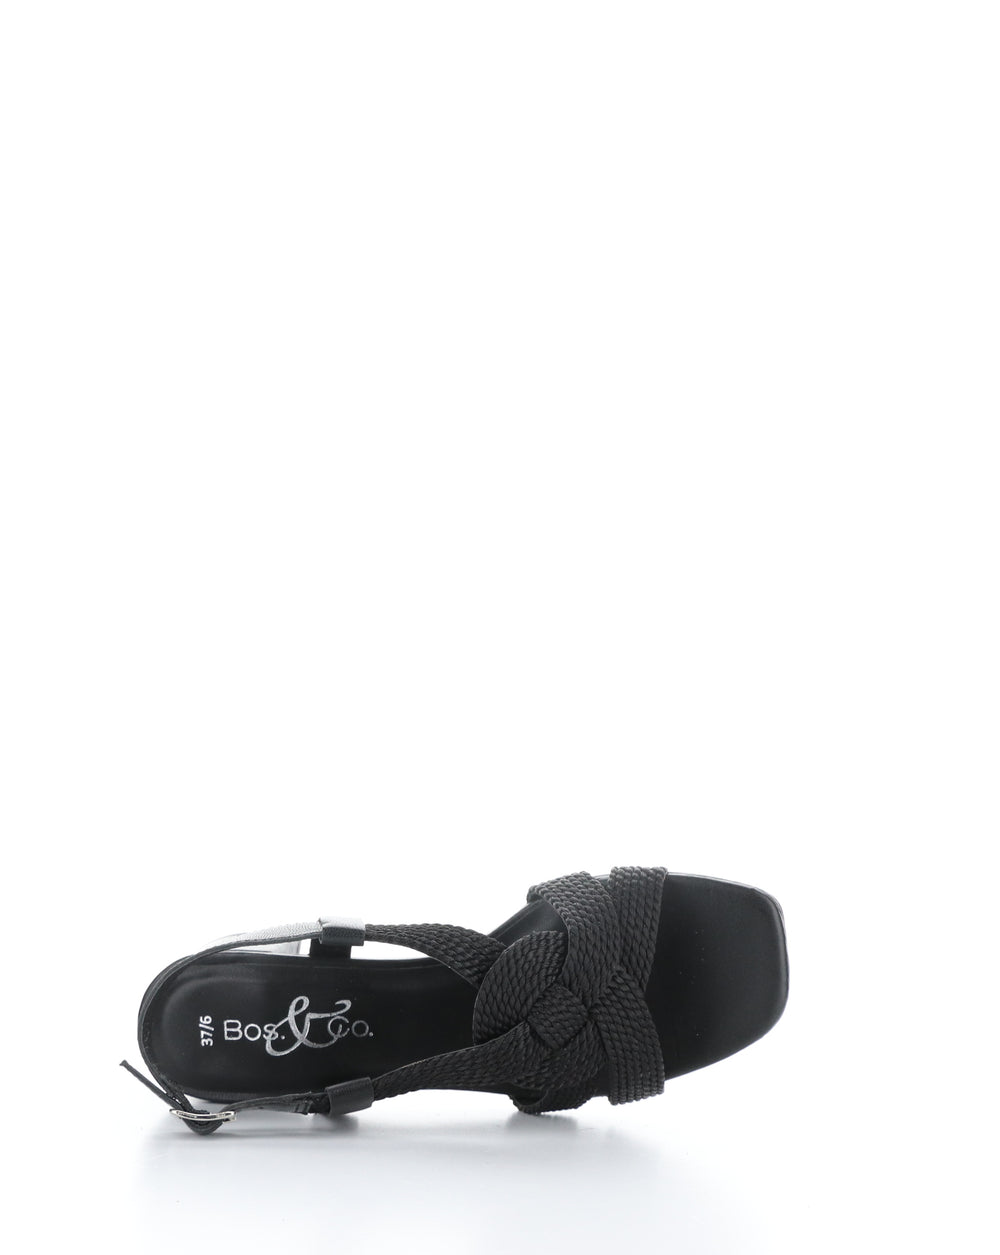 UPBEAT BLACK Buckle Sandals